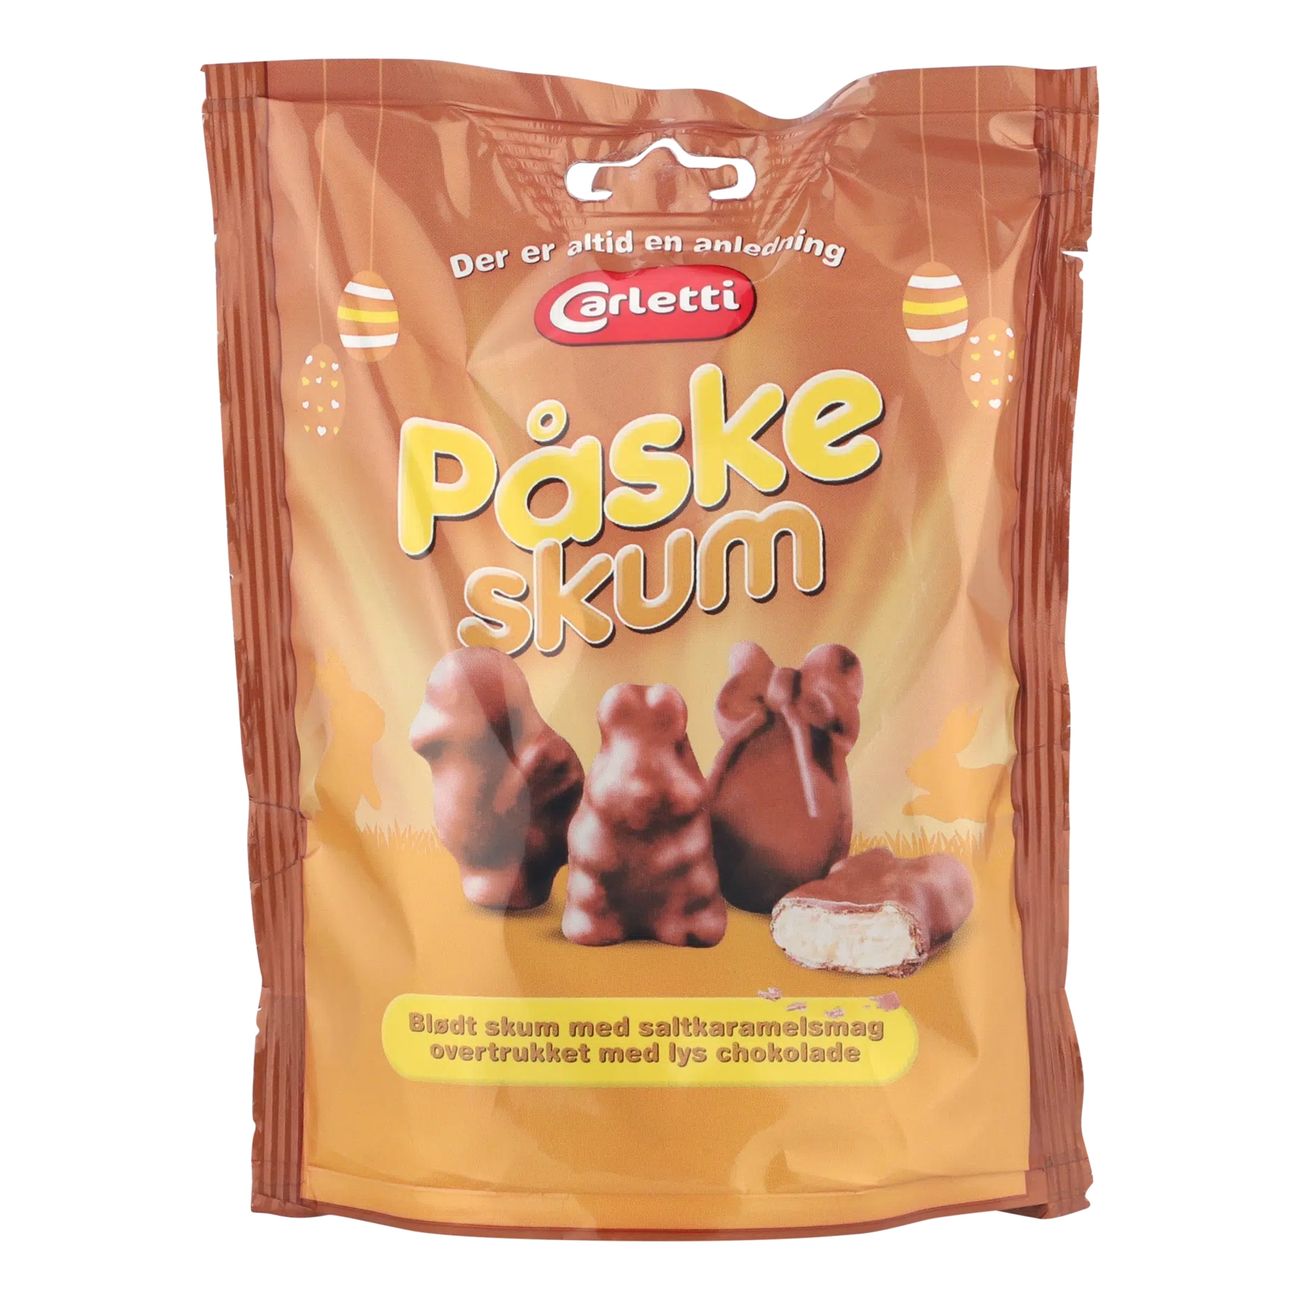 carletti-paskskum-salt-karamell-ljus-choklad-93158-1